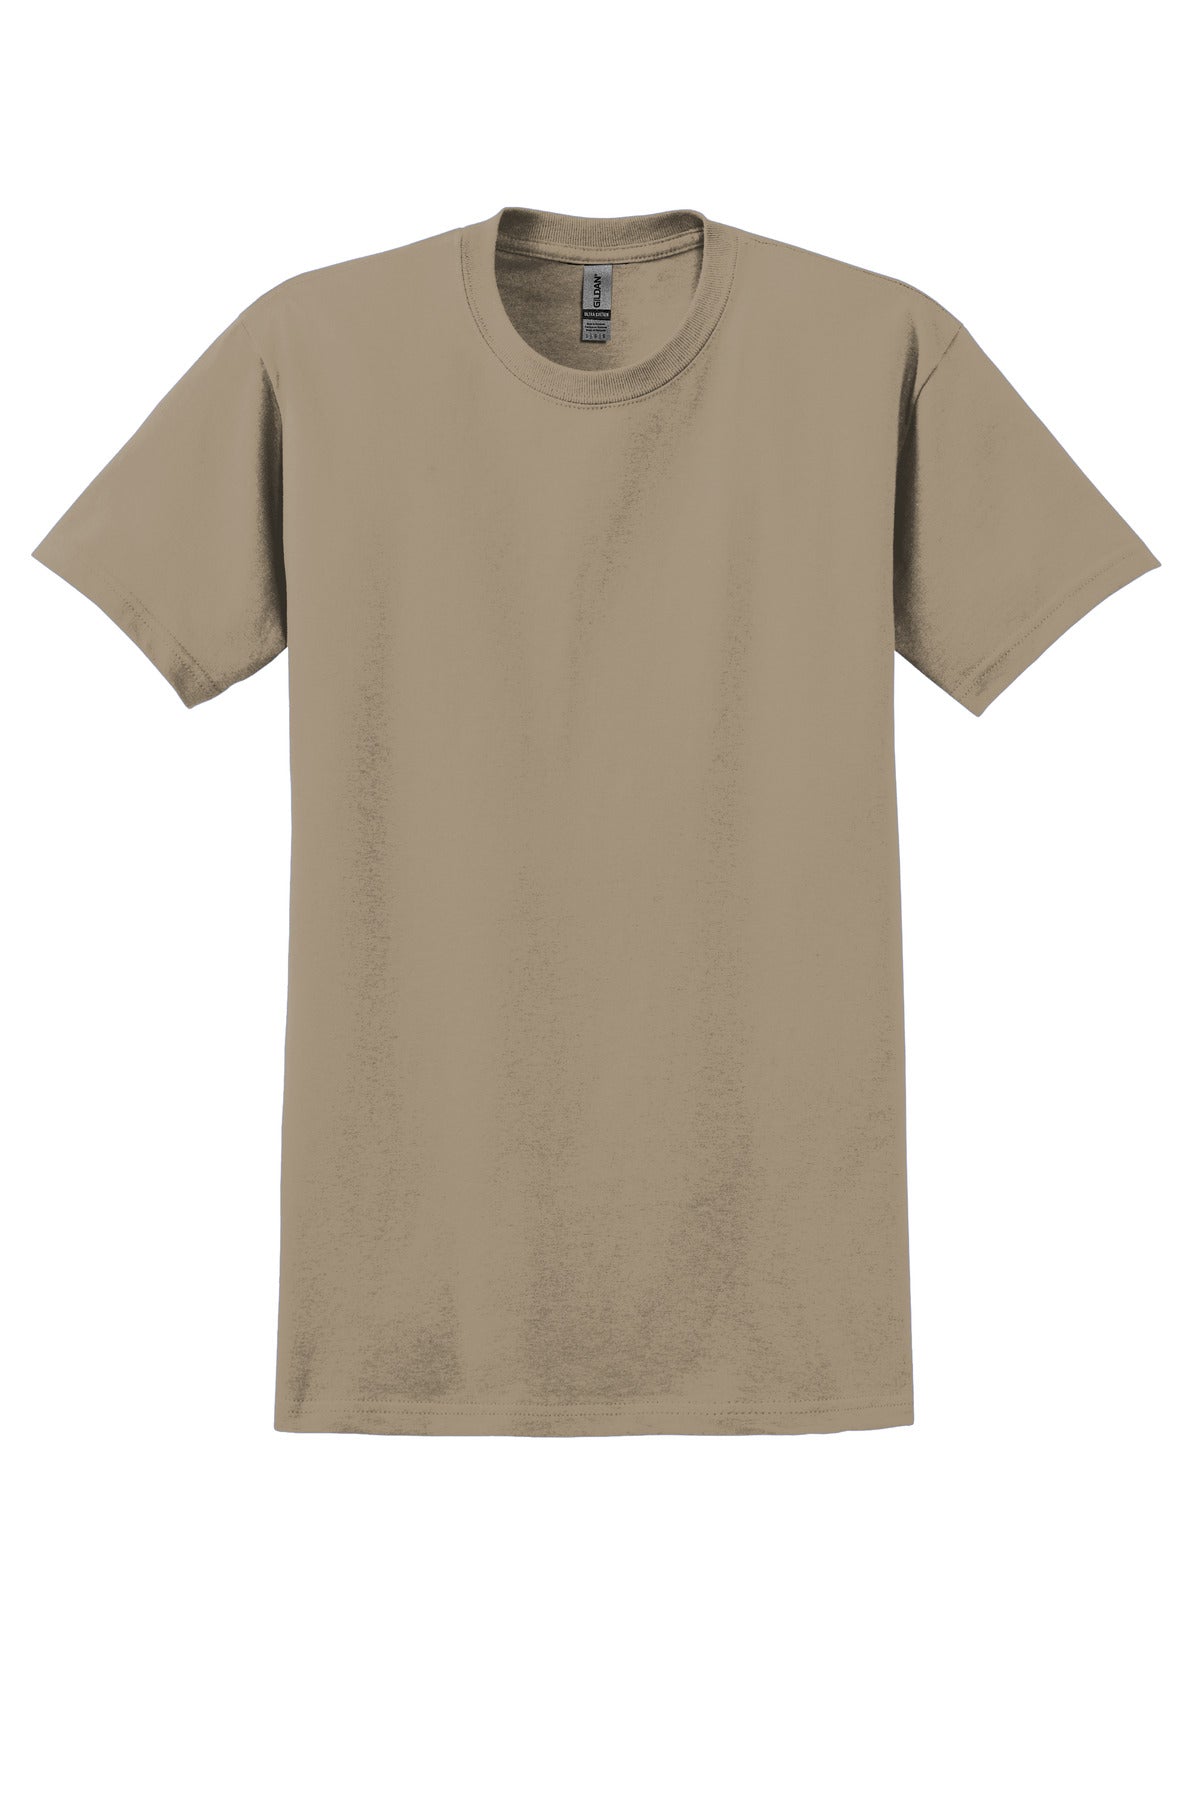 Gildan - Ultra Cotton 100% US Cotton T-Shirt. 2000 - Tan